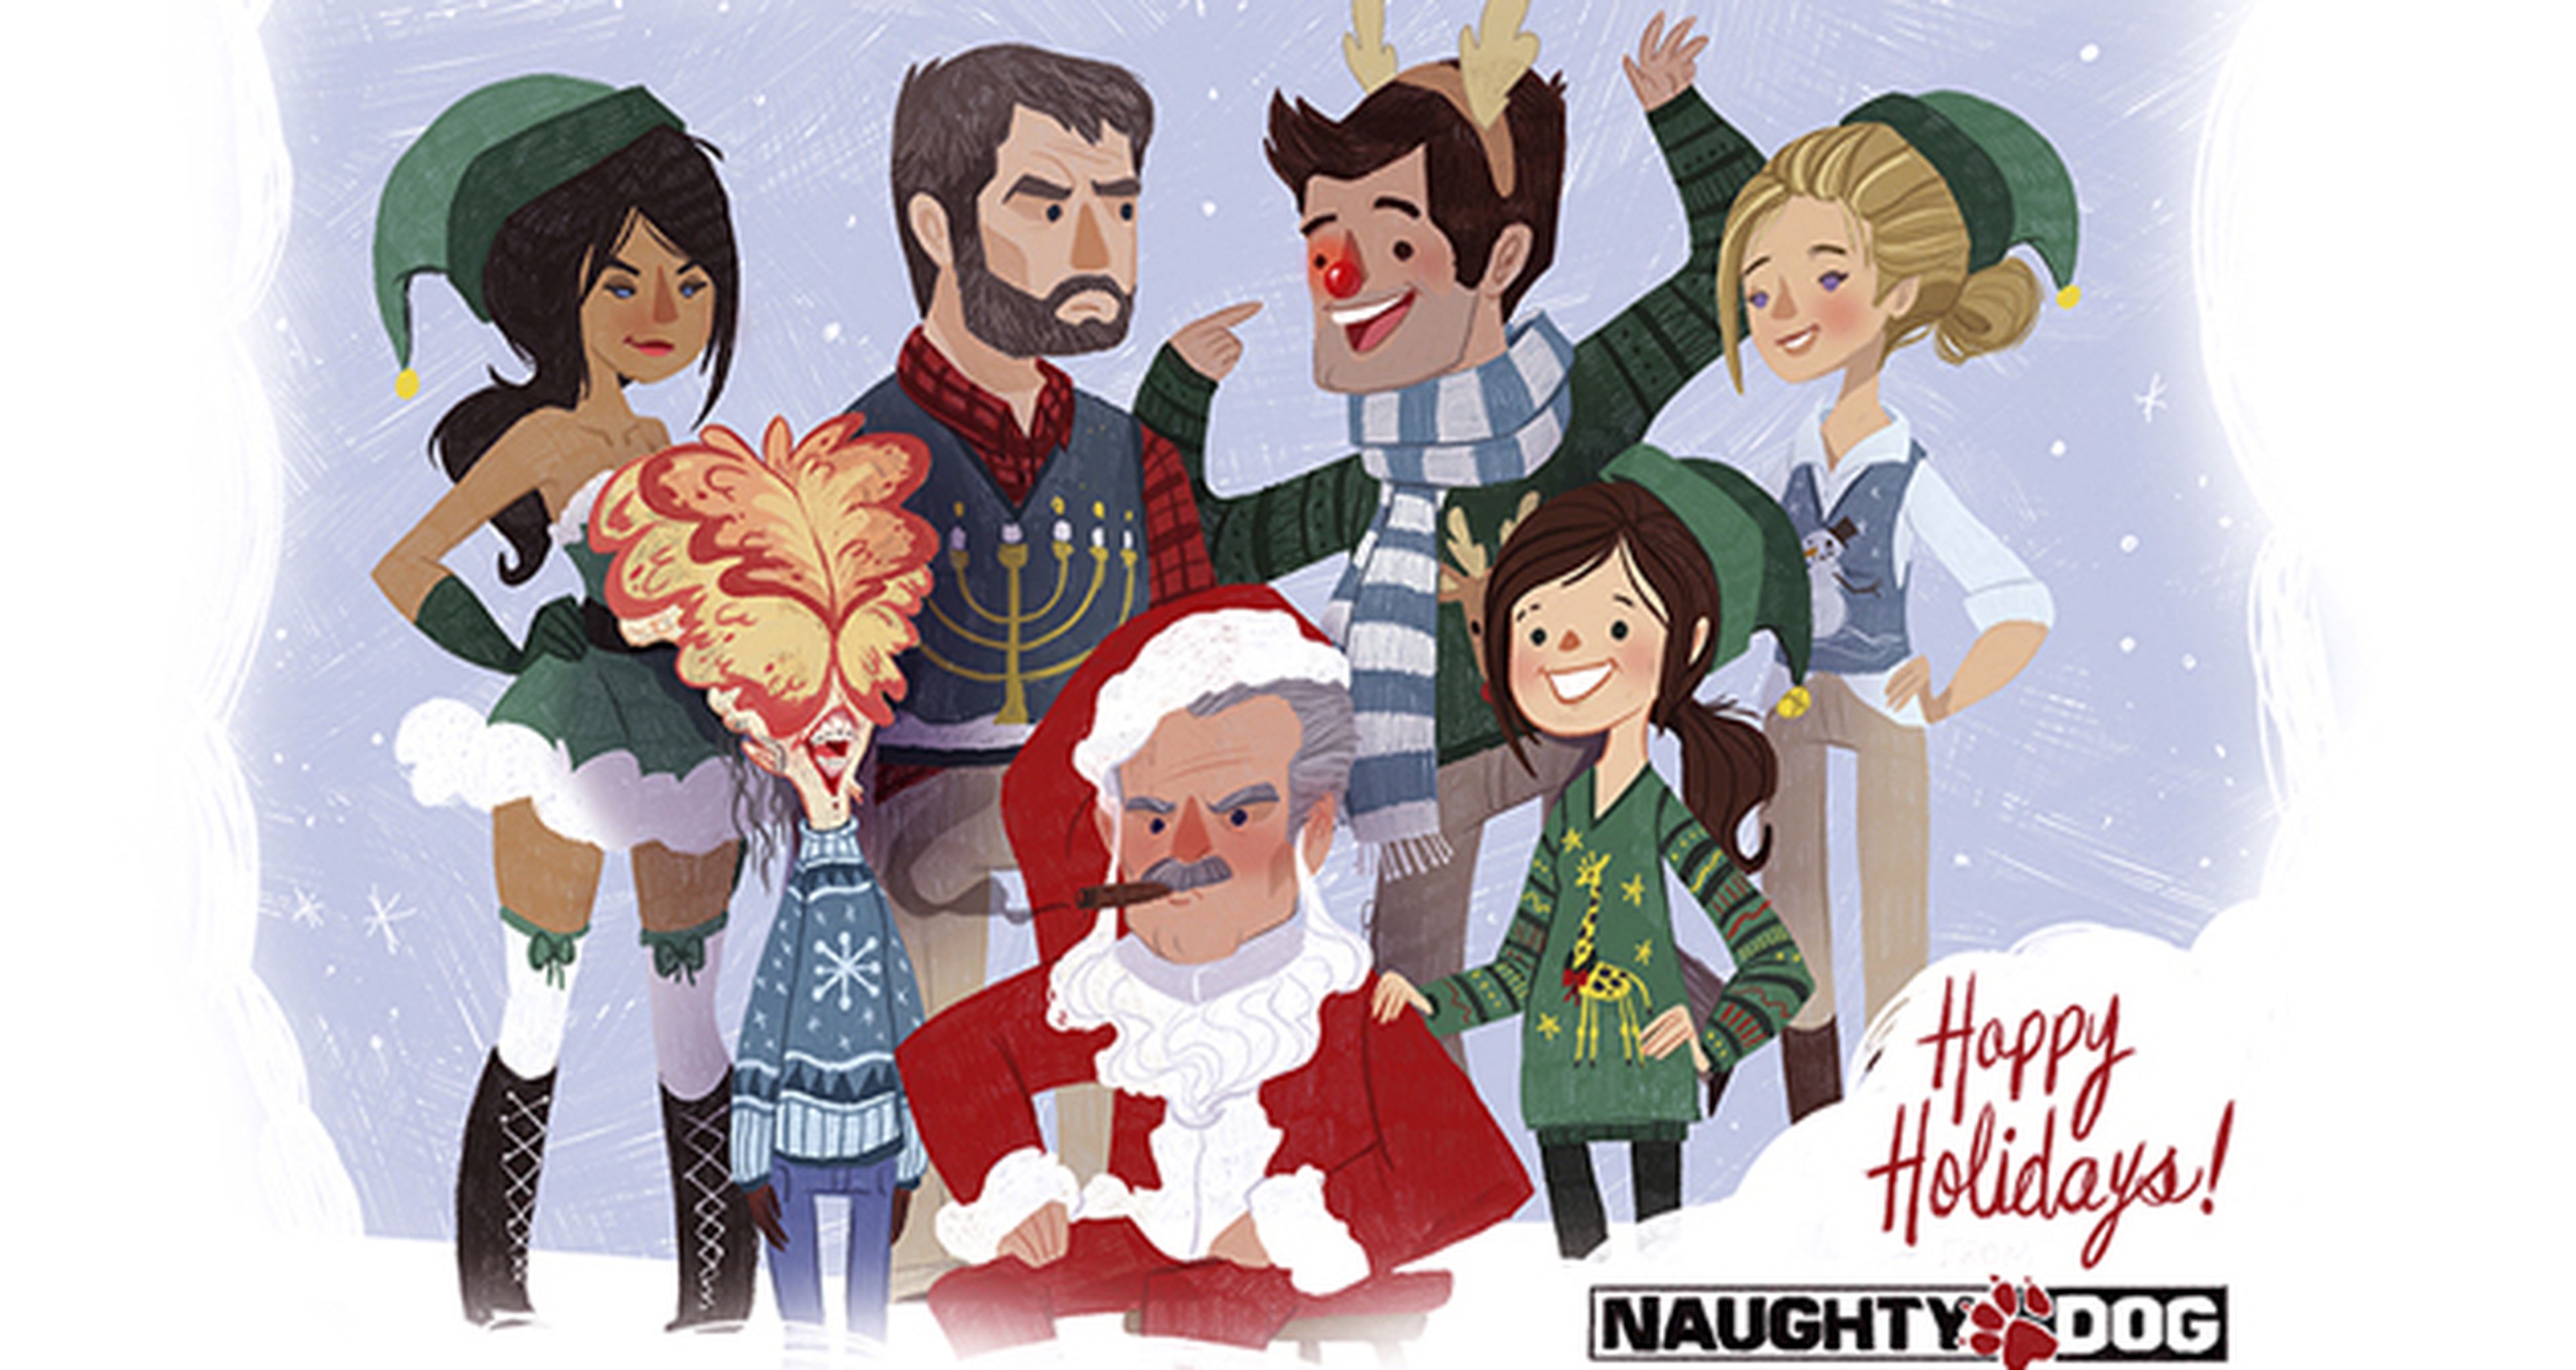 Así nos felicita las fiestas navideñas Naughty Dog